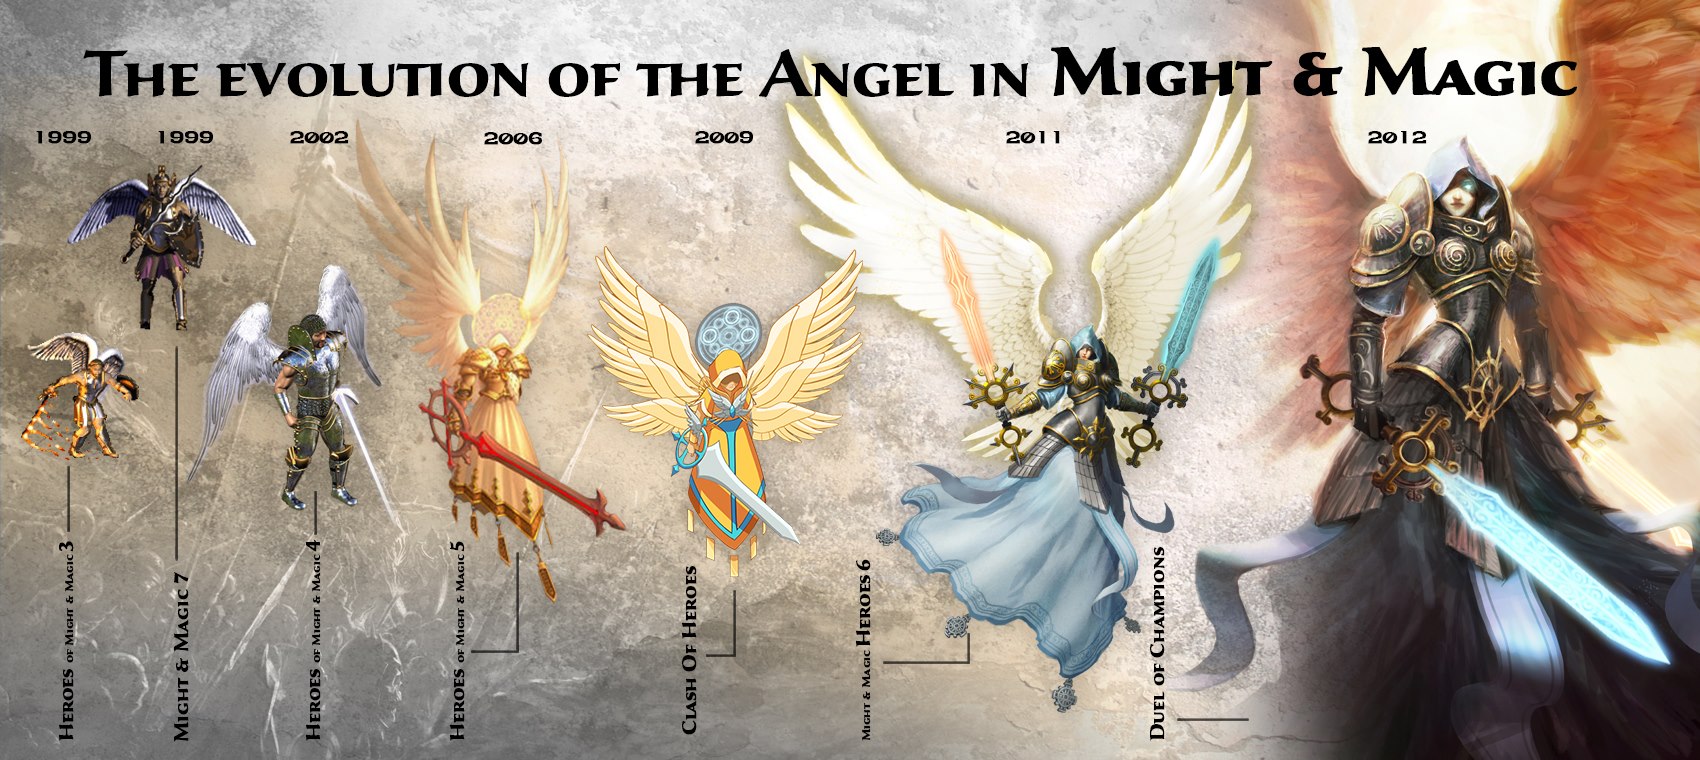 6 angel